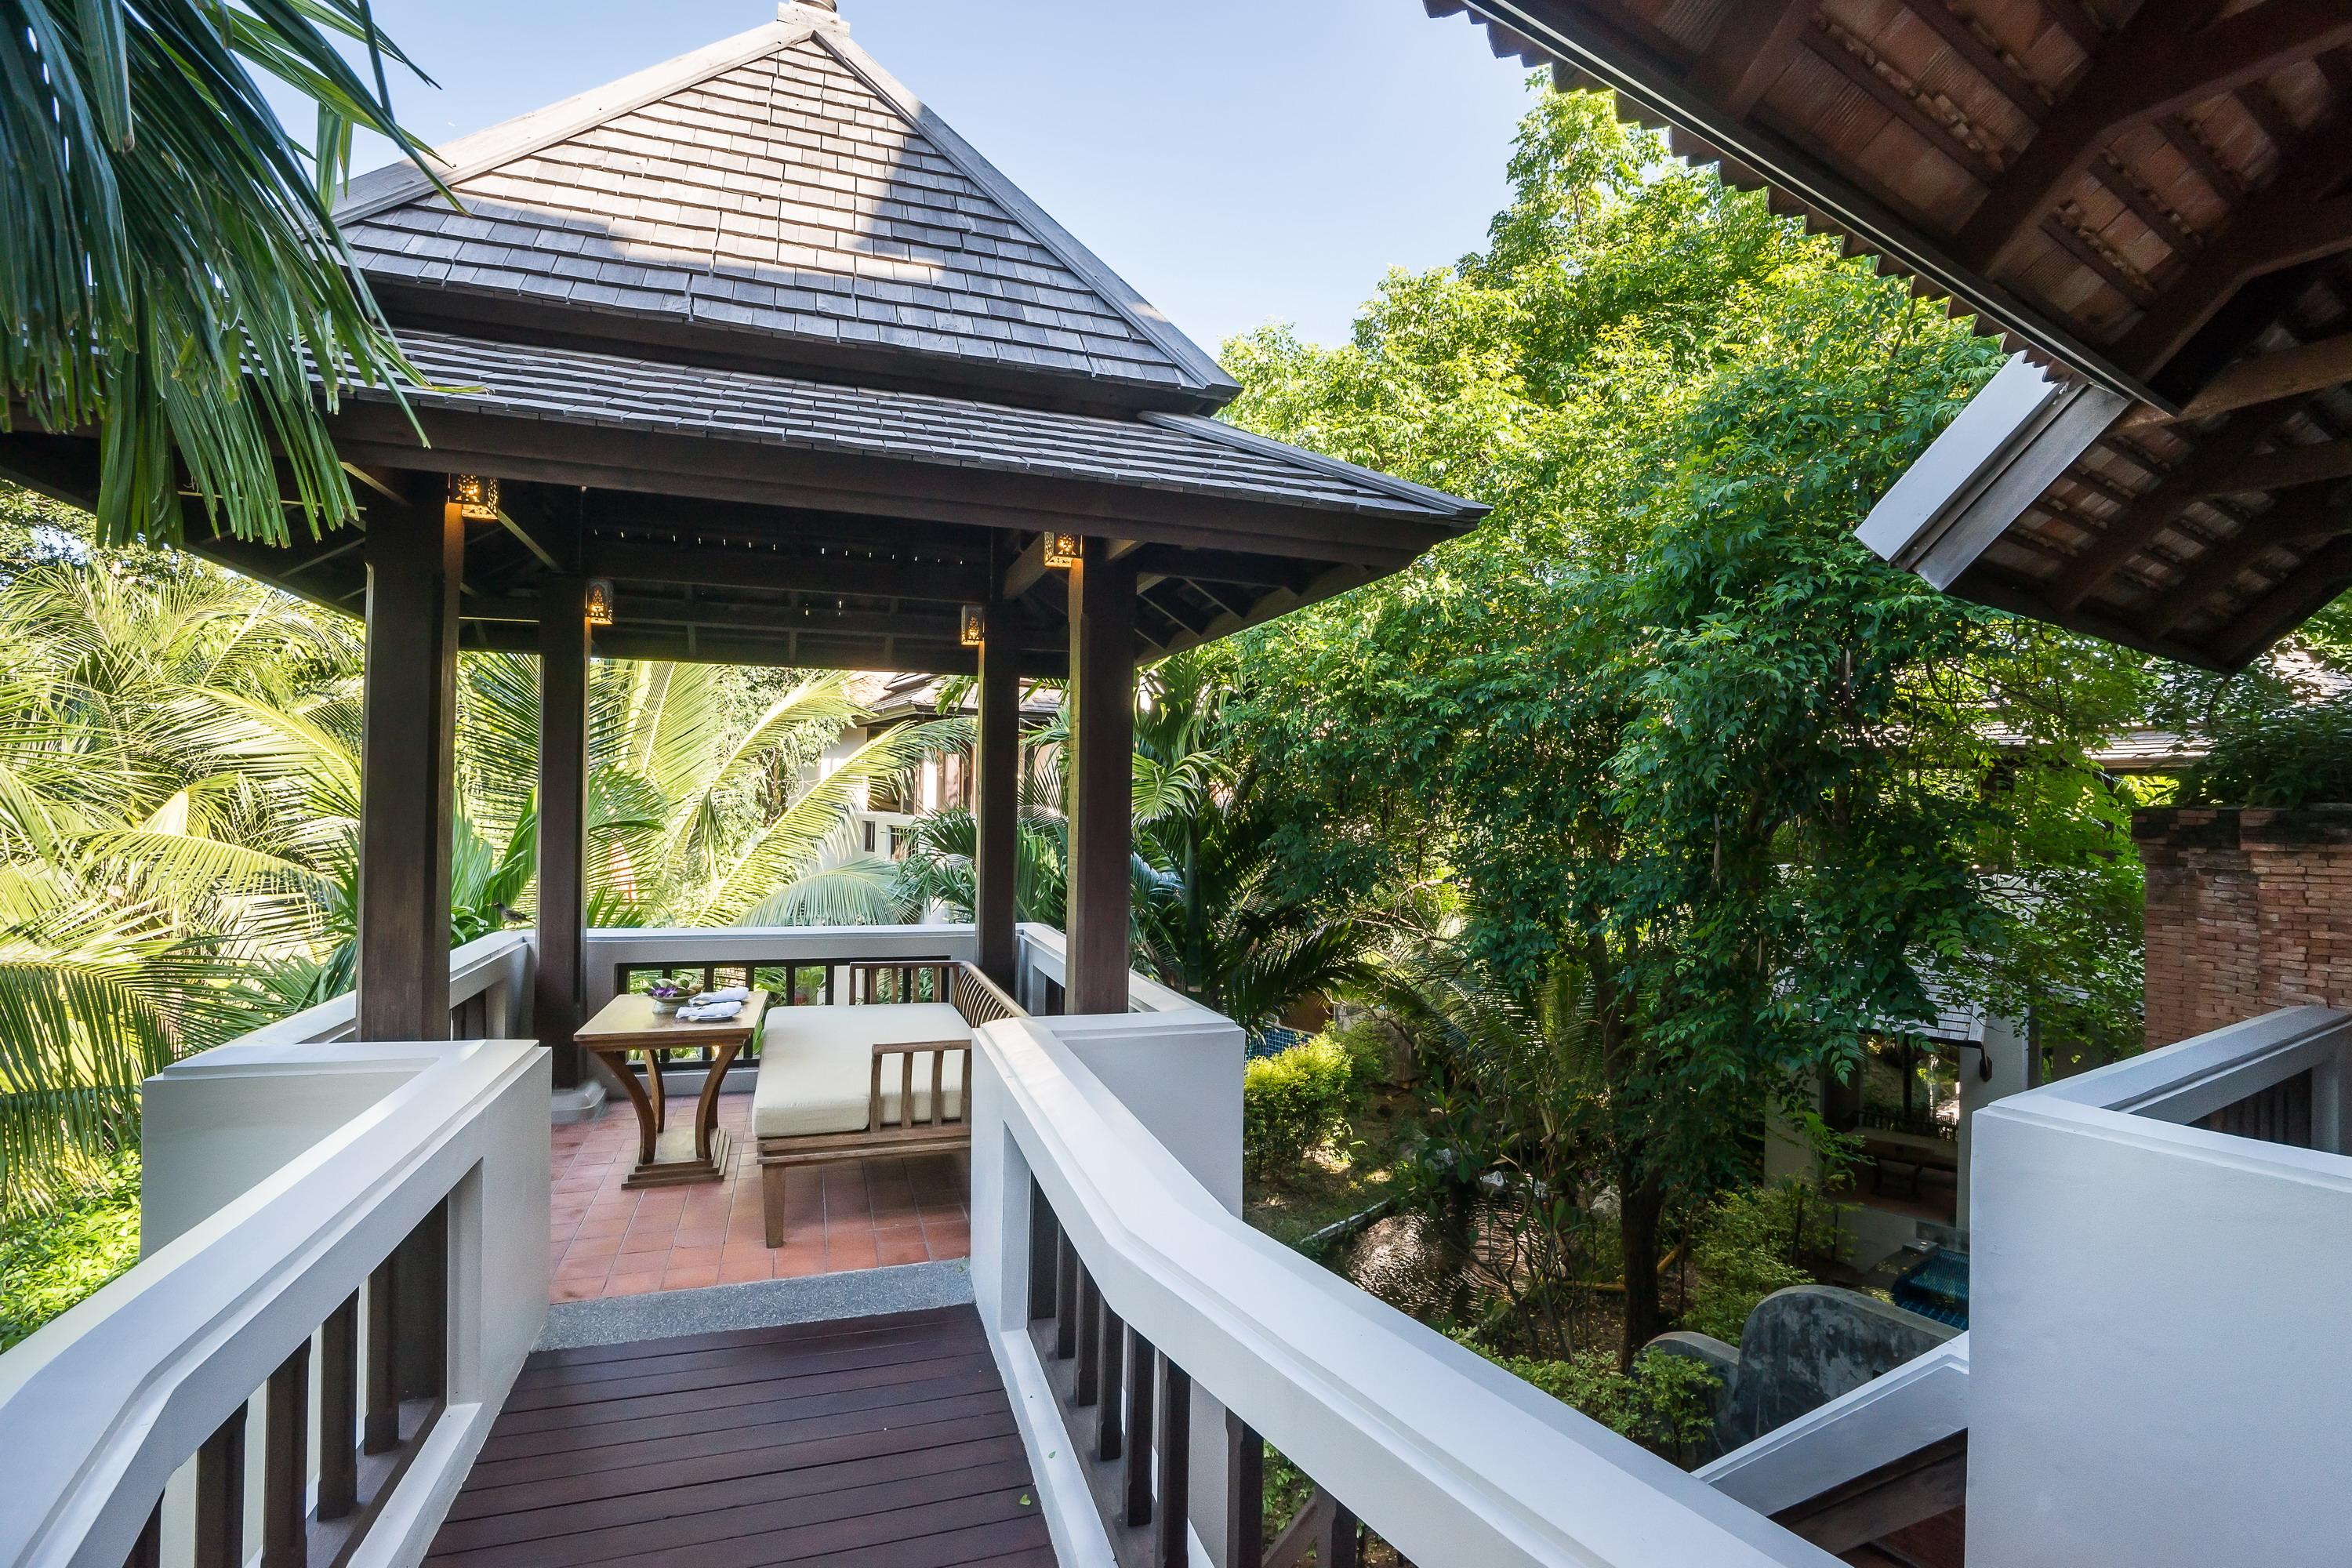 Royal Muang Samui Villas - Sha Extra Plus Choeng Mon Exterior photo